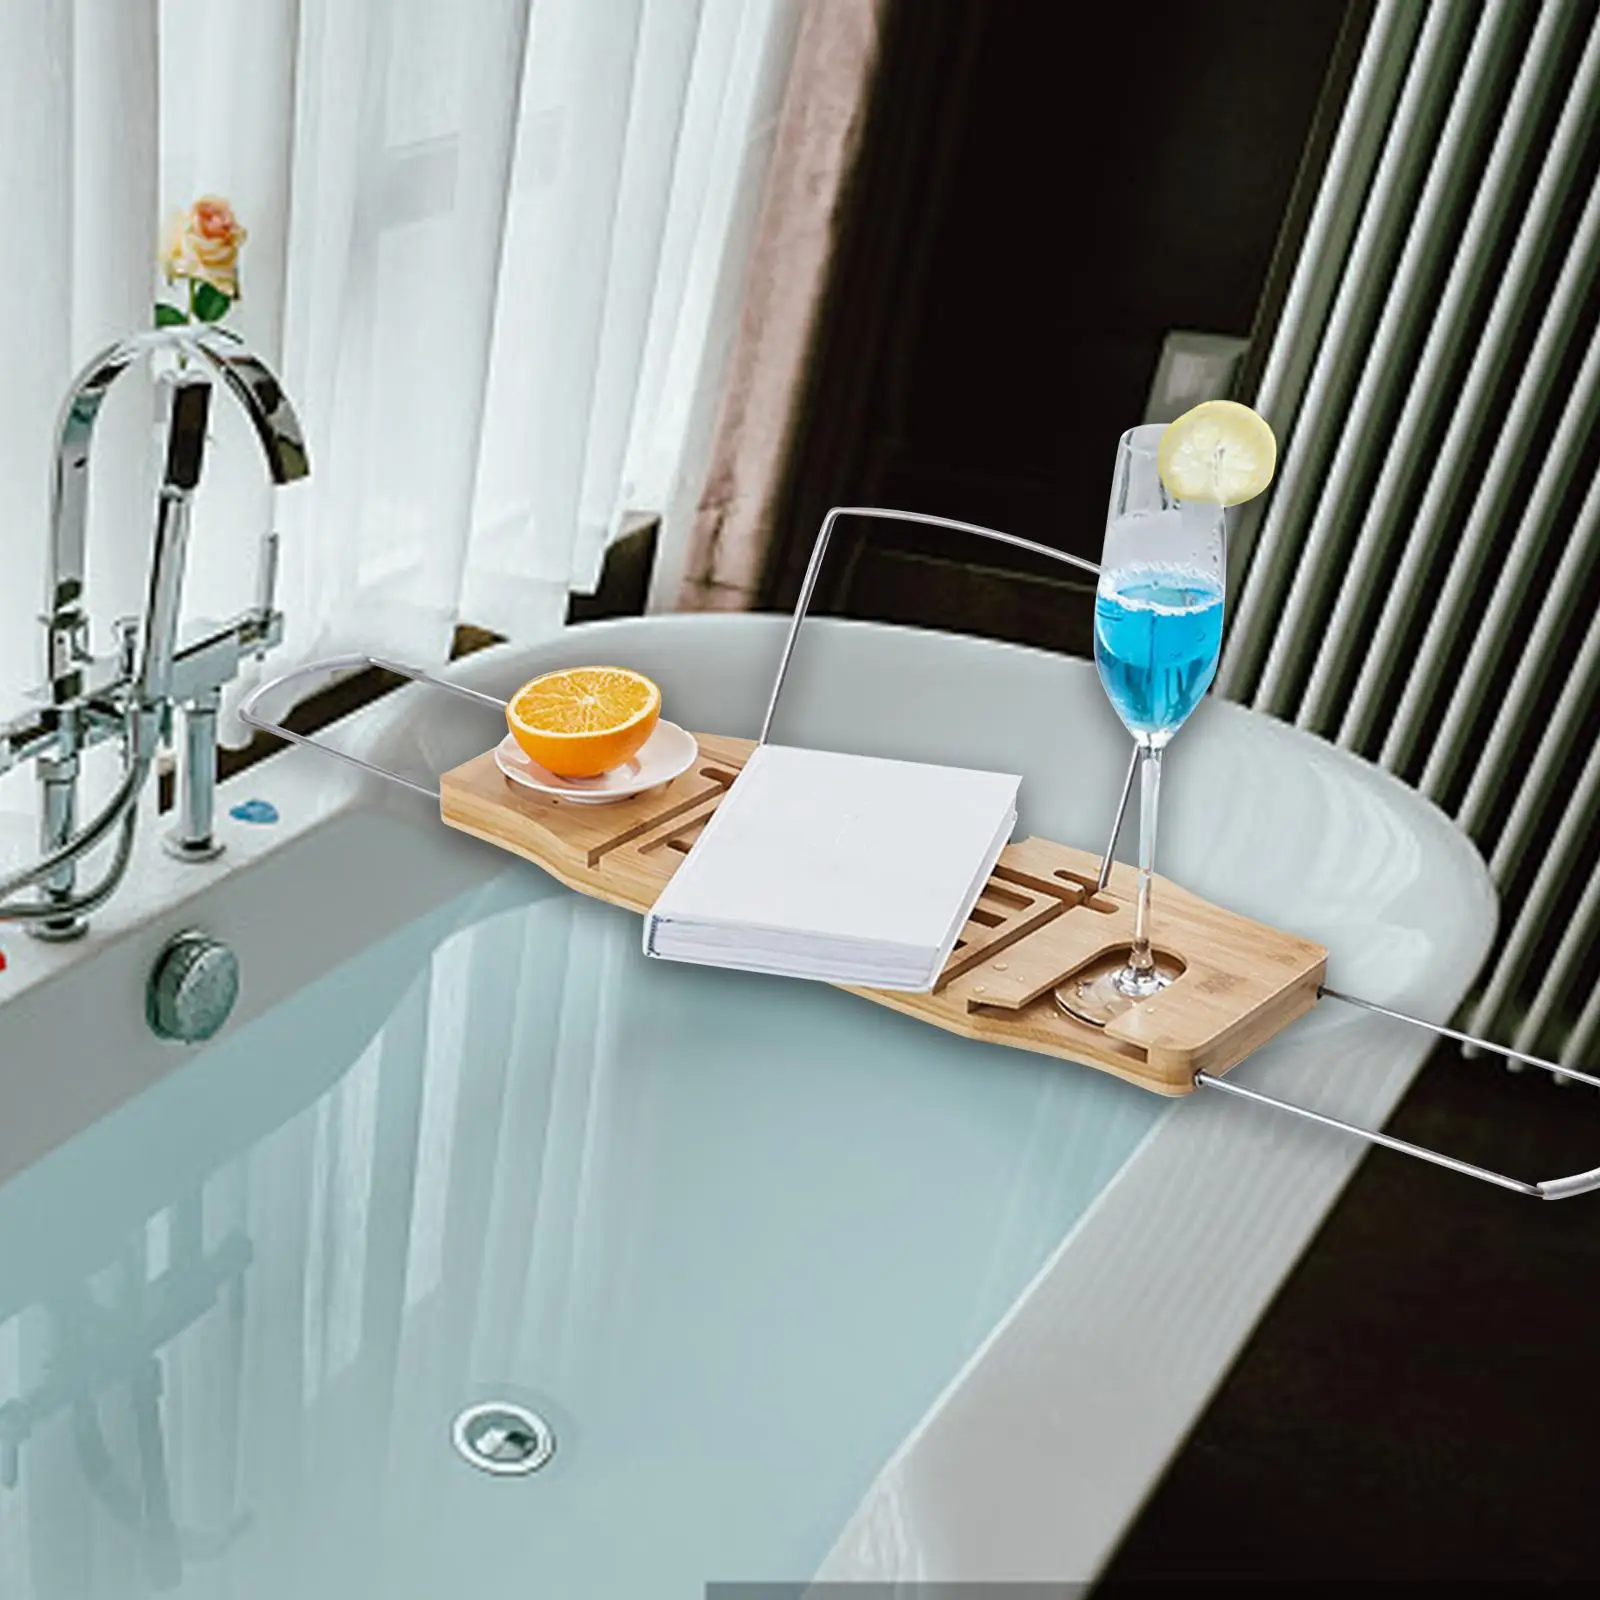 Extendable Bath Tub Caddy Bath Caddy Tub Table Tablet Holder Bath Tub Tray Shelf Book Candle Holder for Small Tubs Home Bathtub